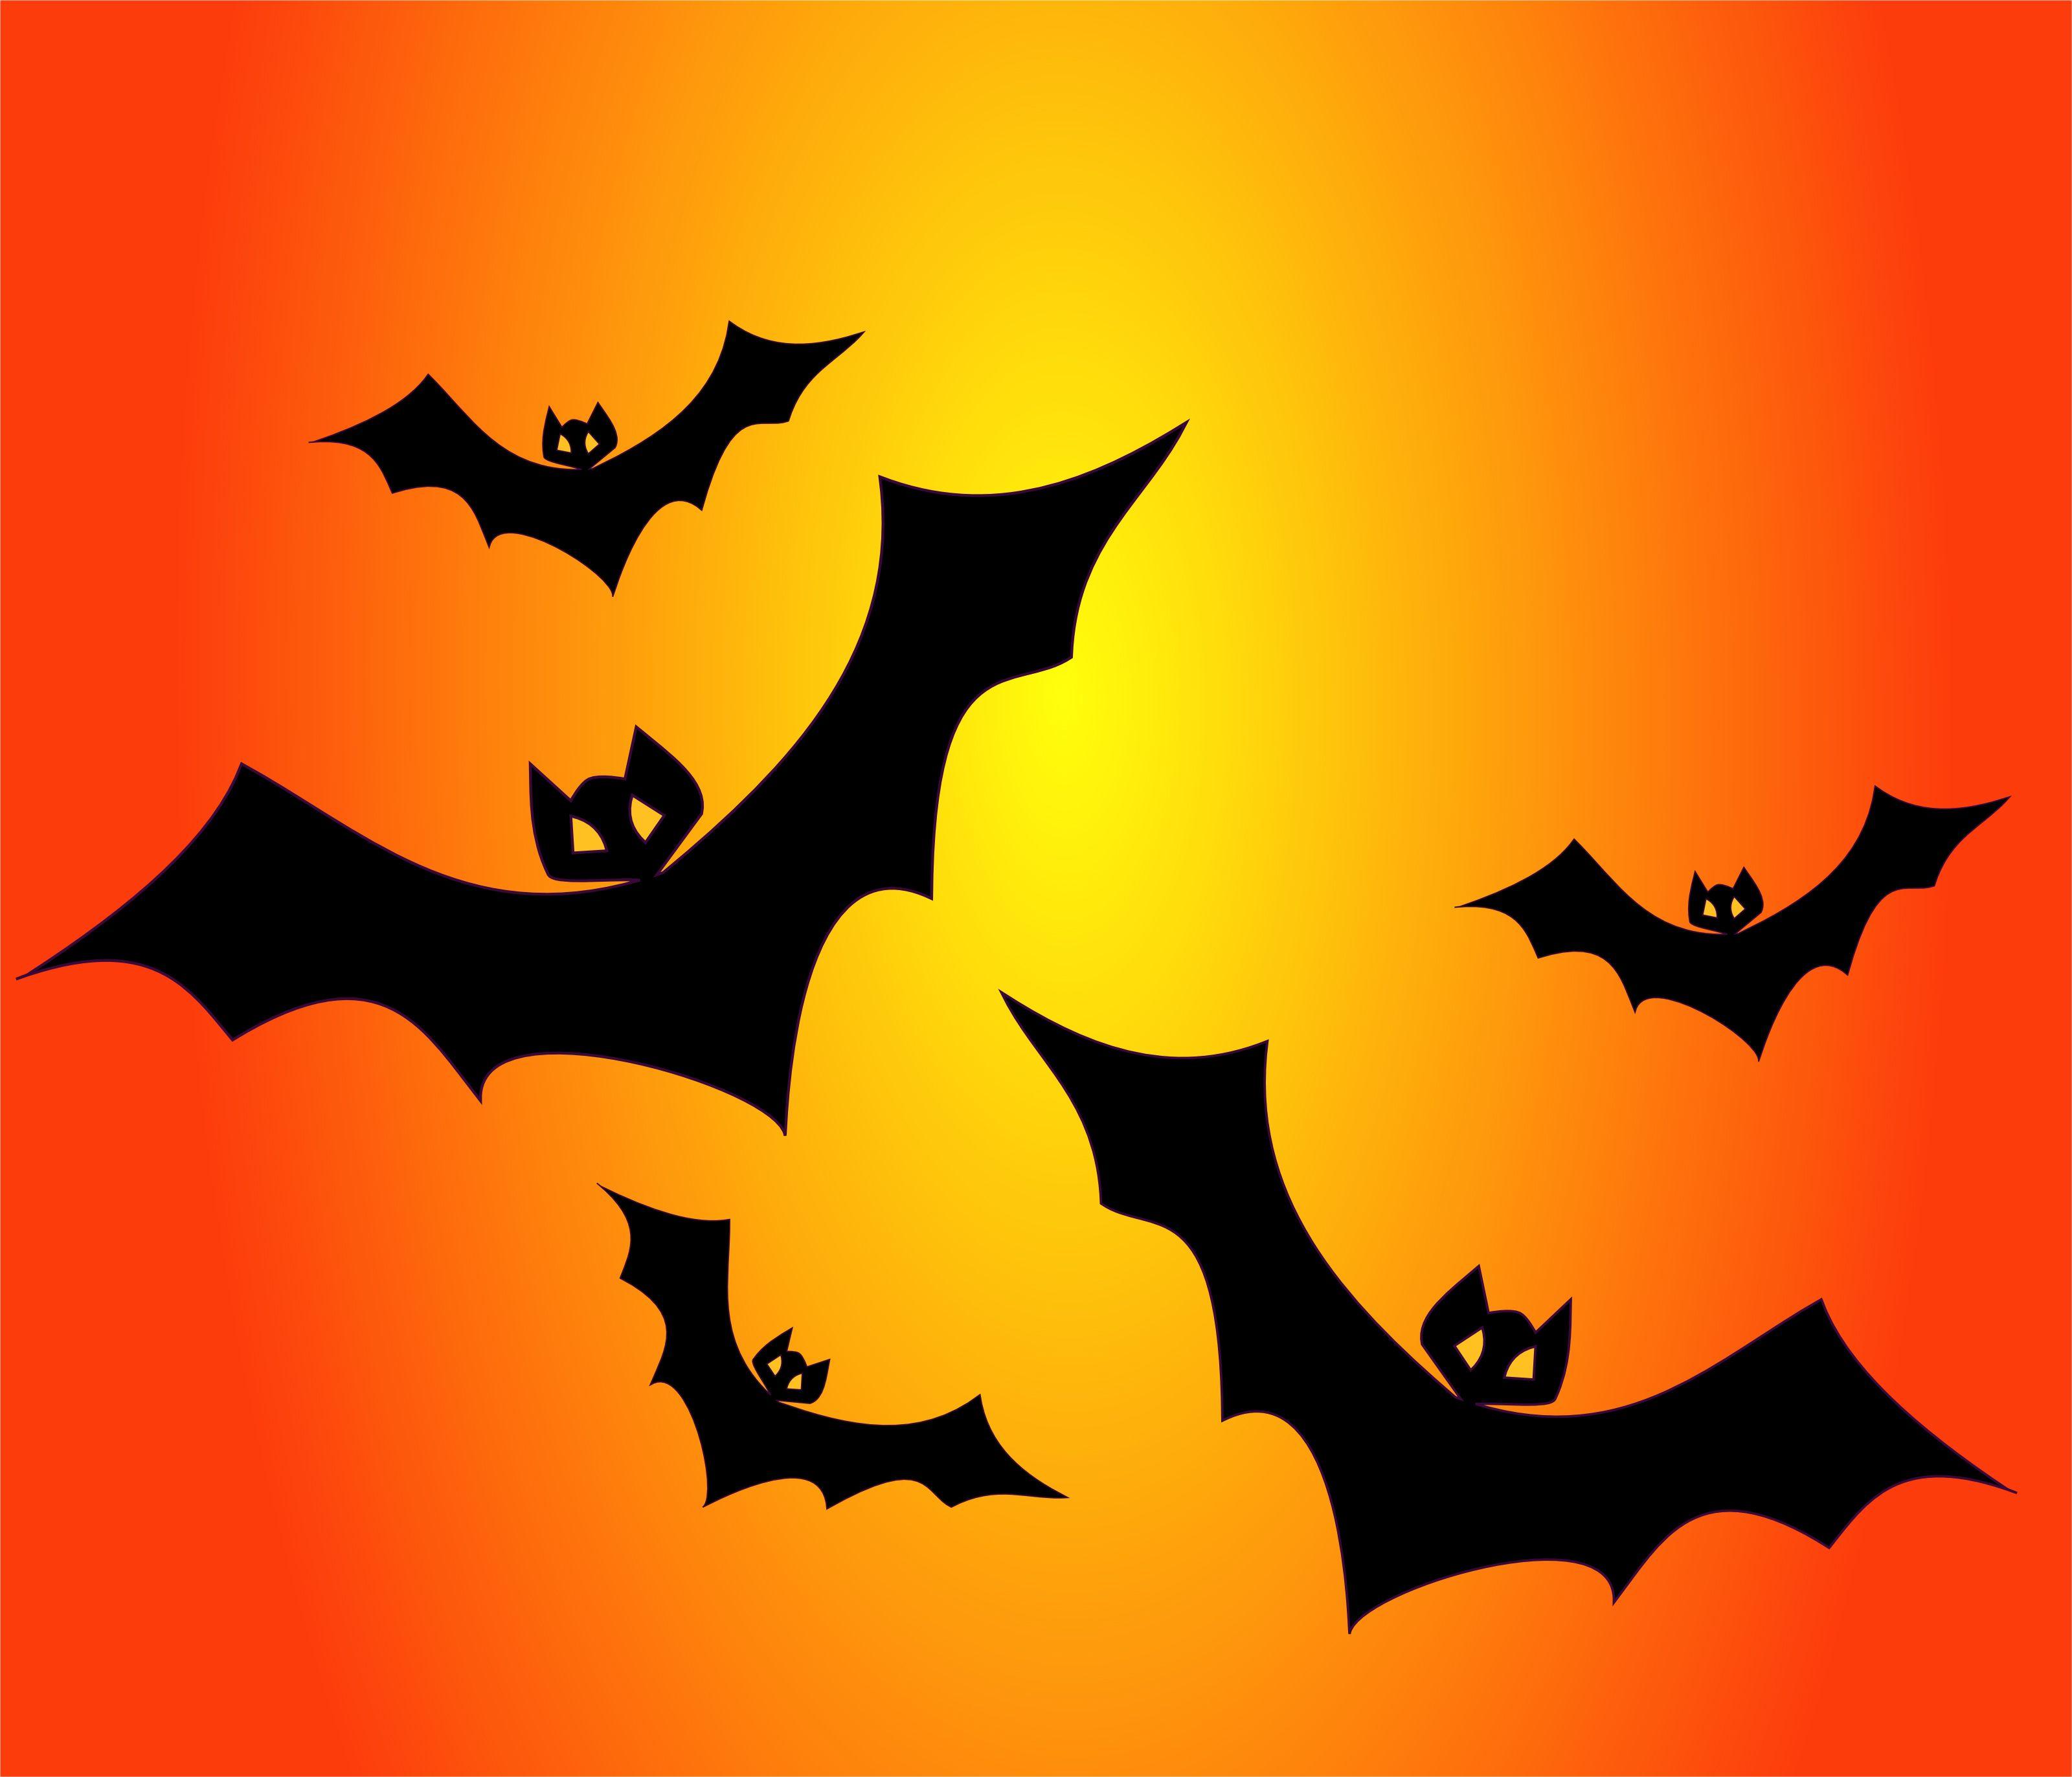 Halloween Bat Image. Free Download Clip Art. Free Clip Art